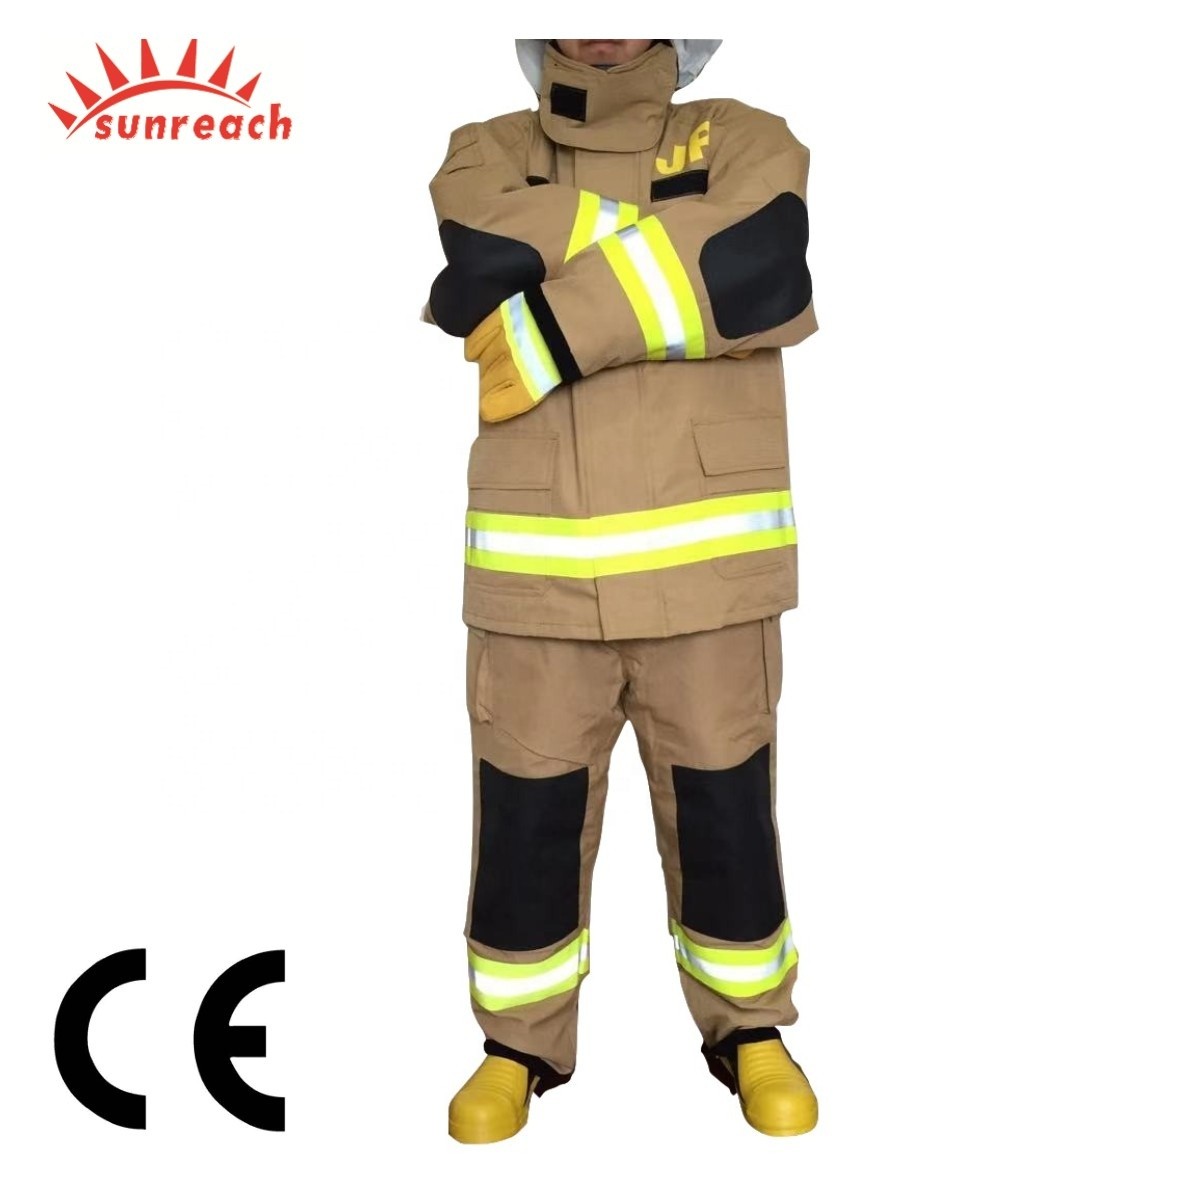 CE Certificate Nomex IIIA EN469 Fire Suit Fireman Suit for firefighter